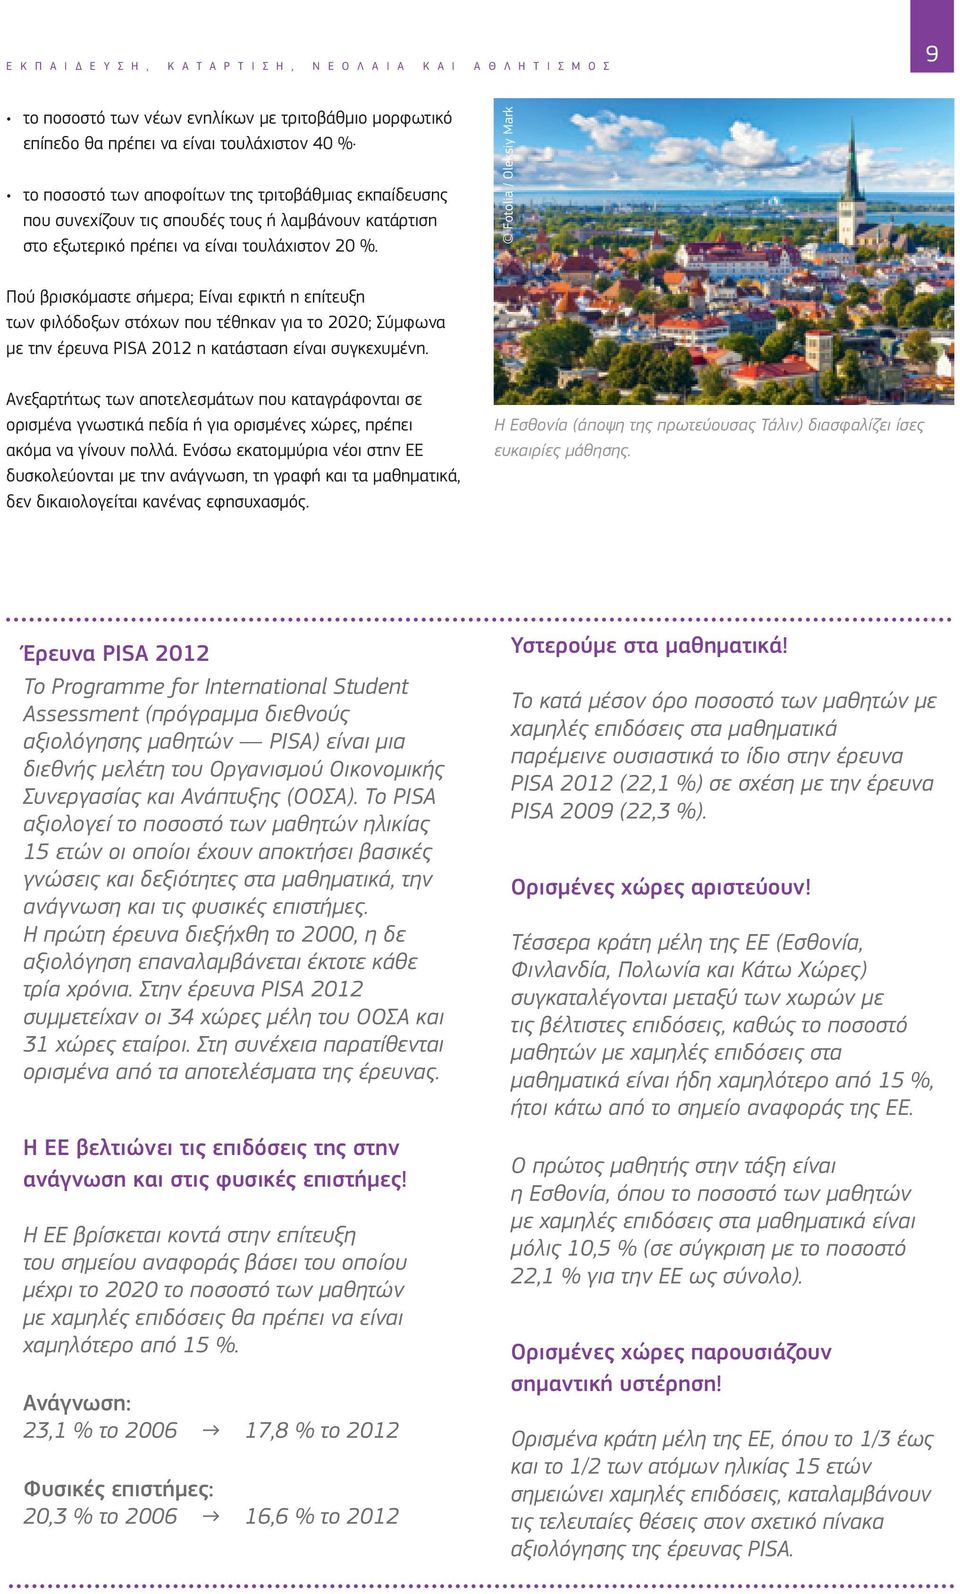 Fotolia / Oleksiy Mark Πού βρισκόμαστε σήμερα; Είναι εφικτή η επίτευξη των φιλόδοξων στόχων που τέθηκαν για το 2020; Σύμφωνα με την έρευνα PISA 2012 η κατάσταση είναι συγκεχυμένη.